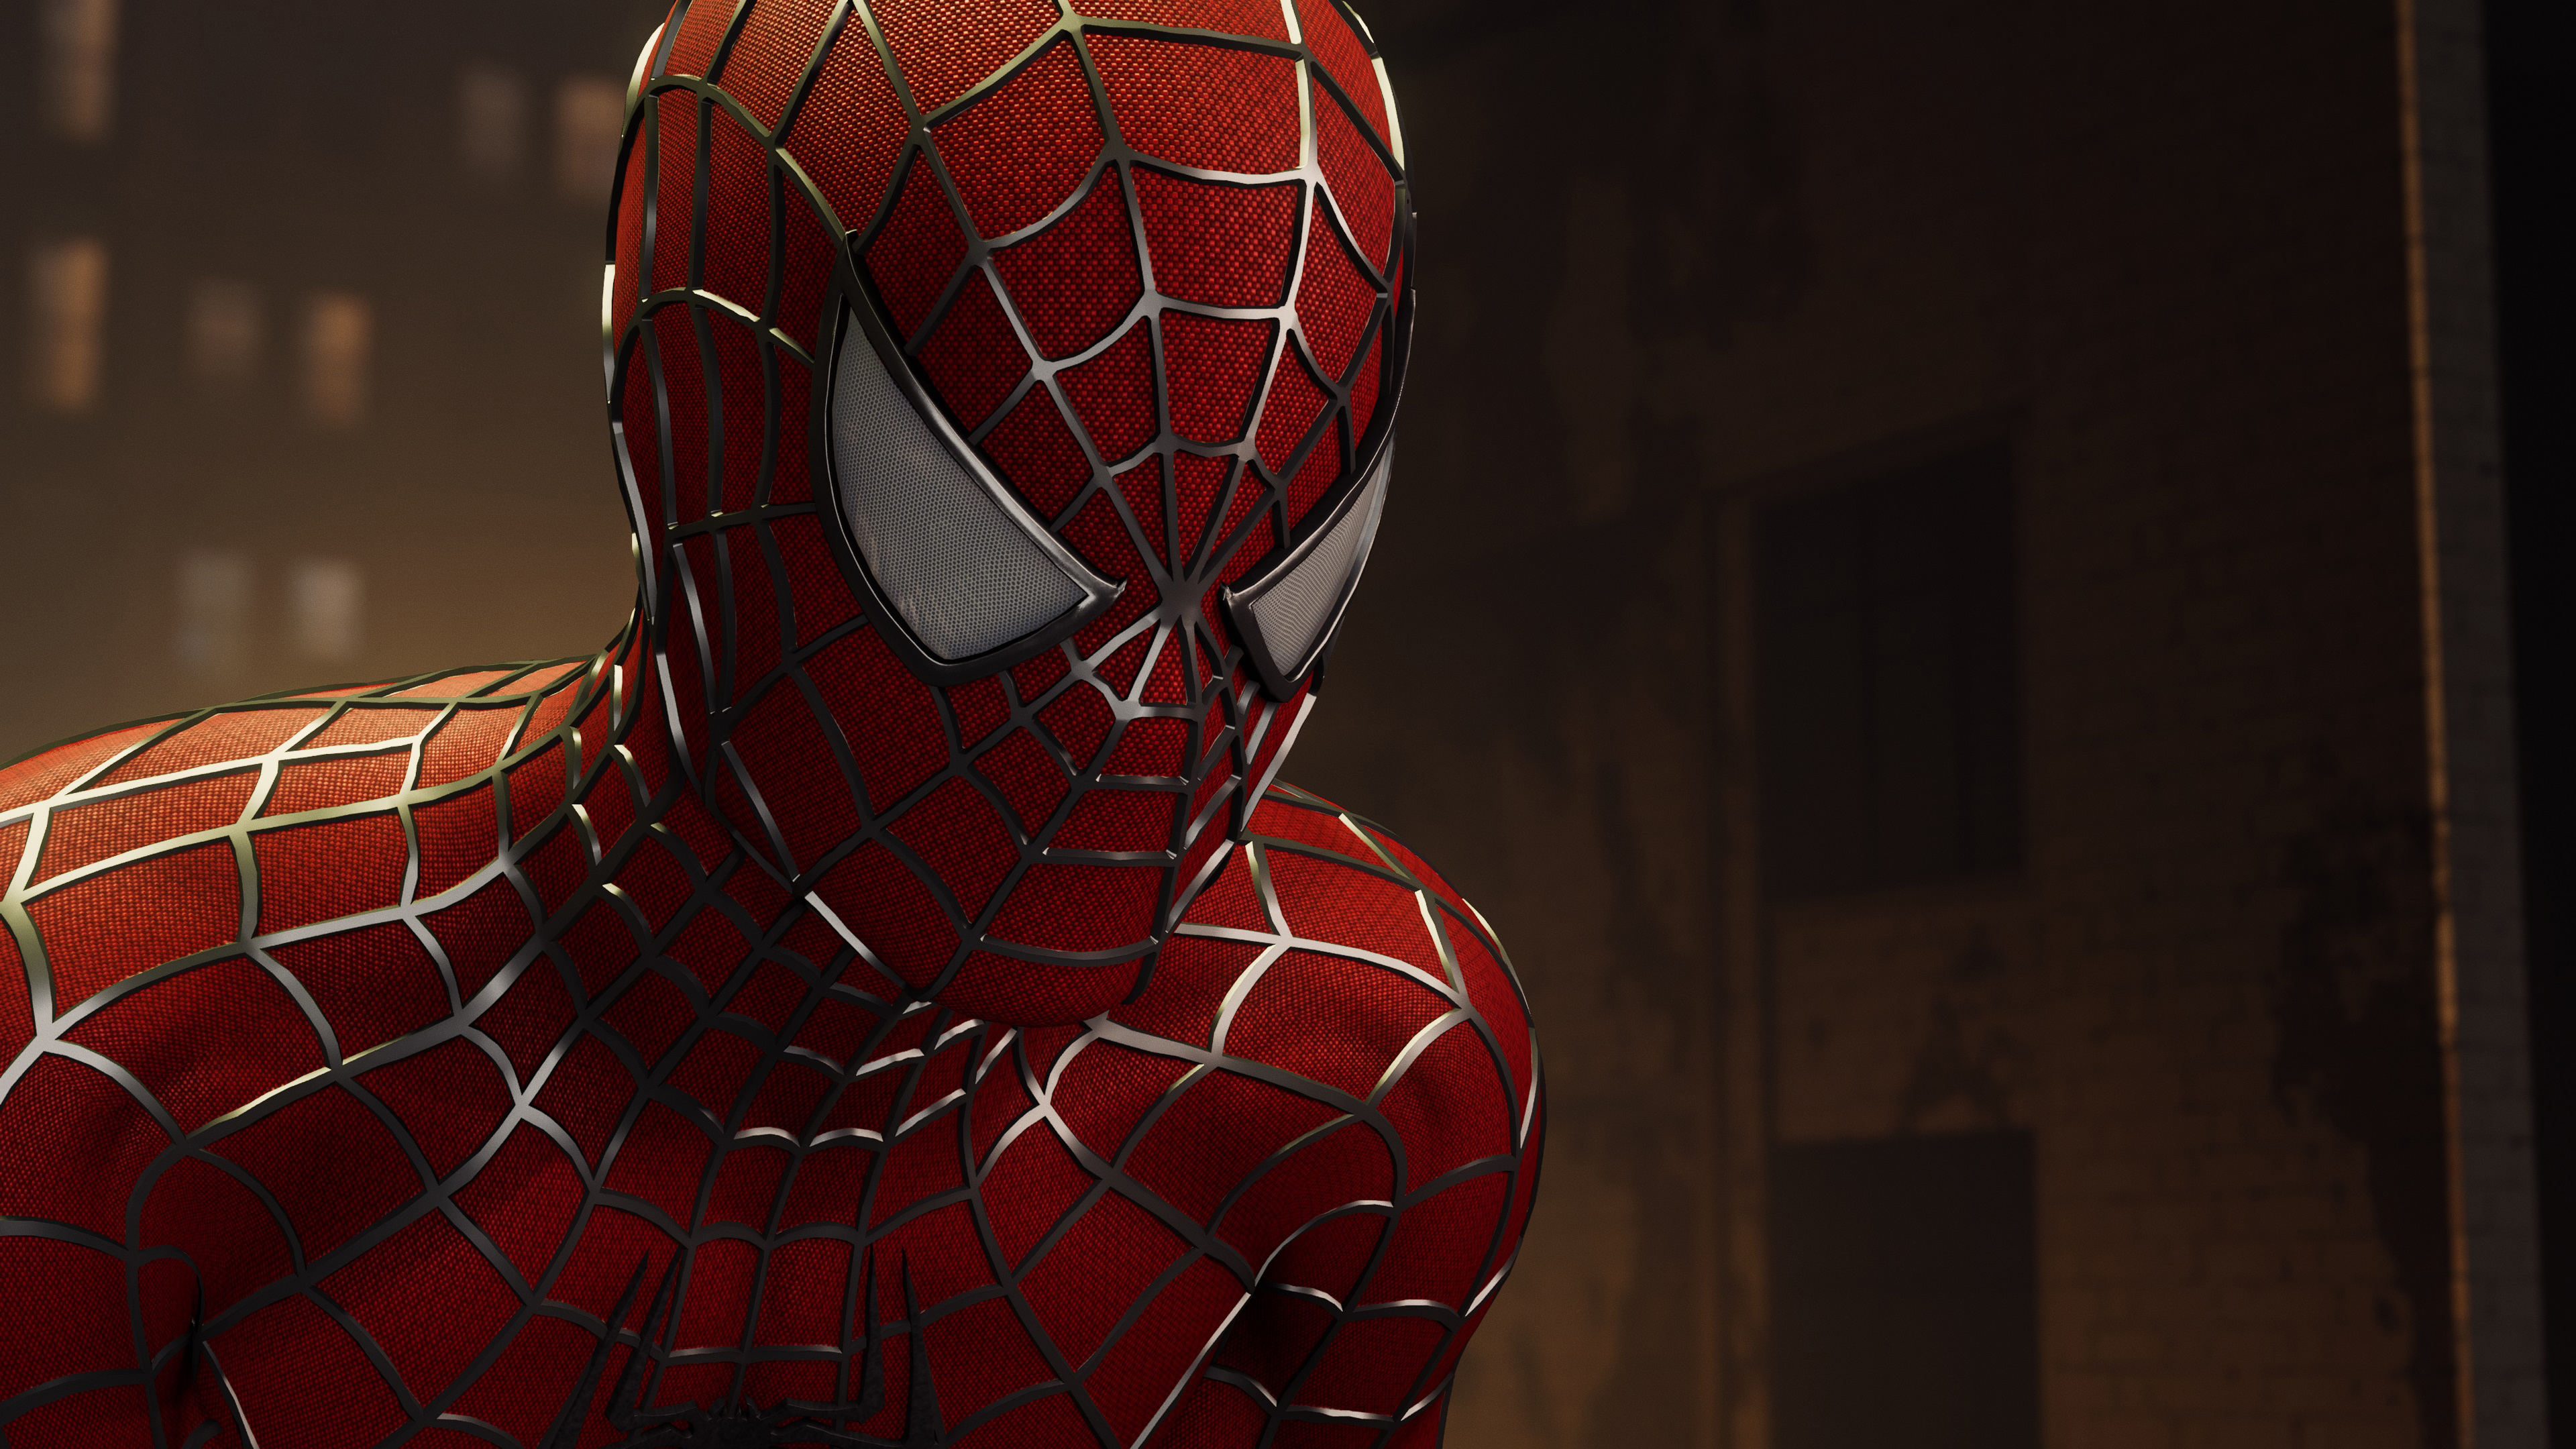 Wallpaper 4k Spiderman 4k 2019 2018 Games Wallpapers 4k